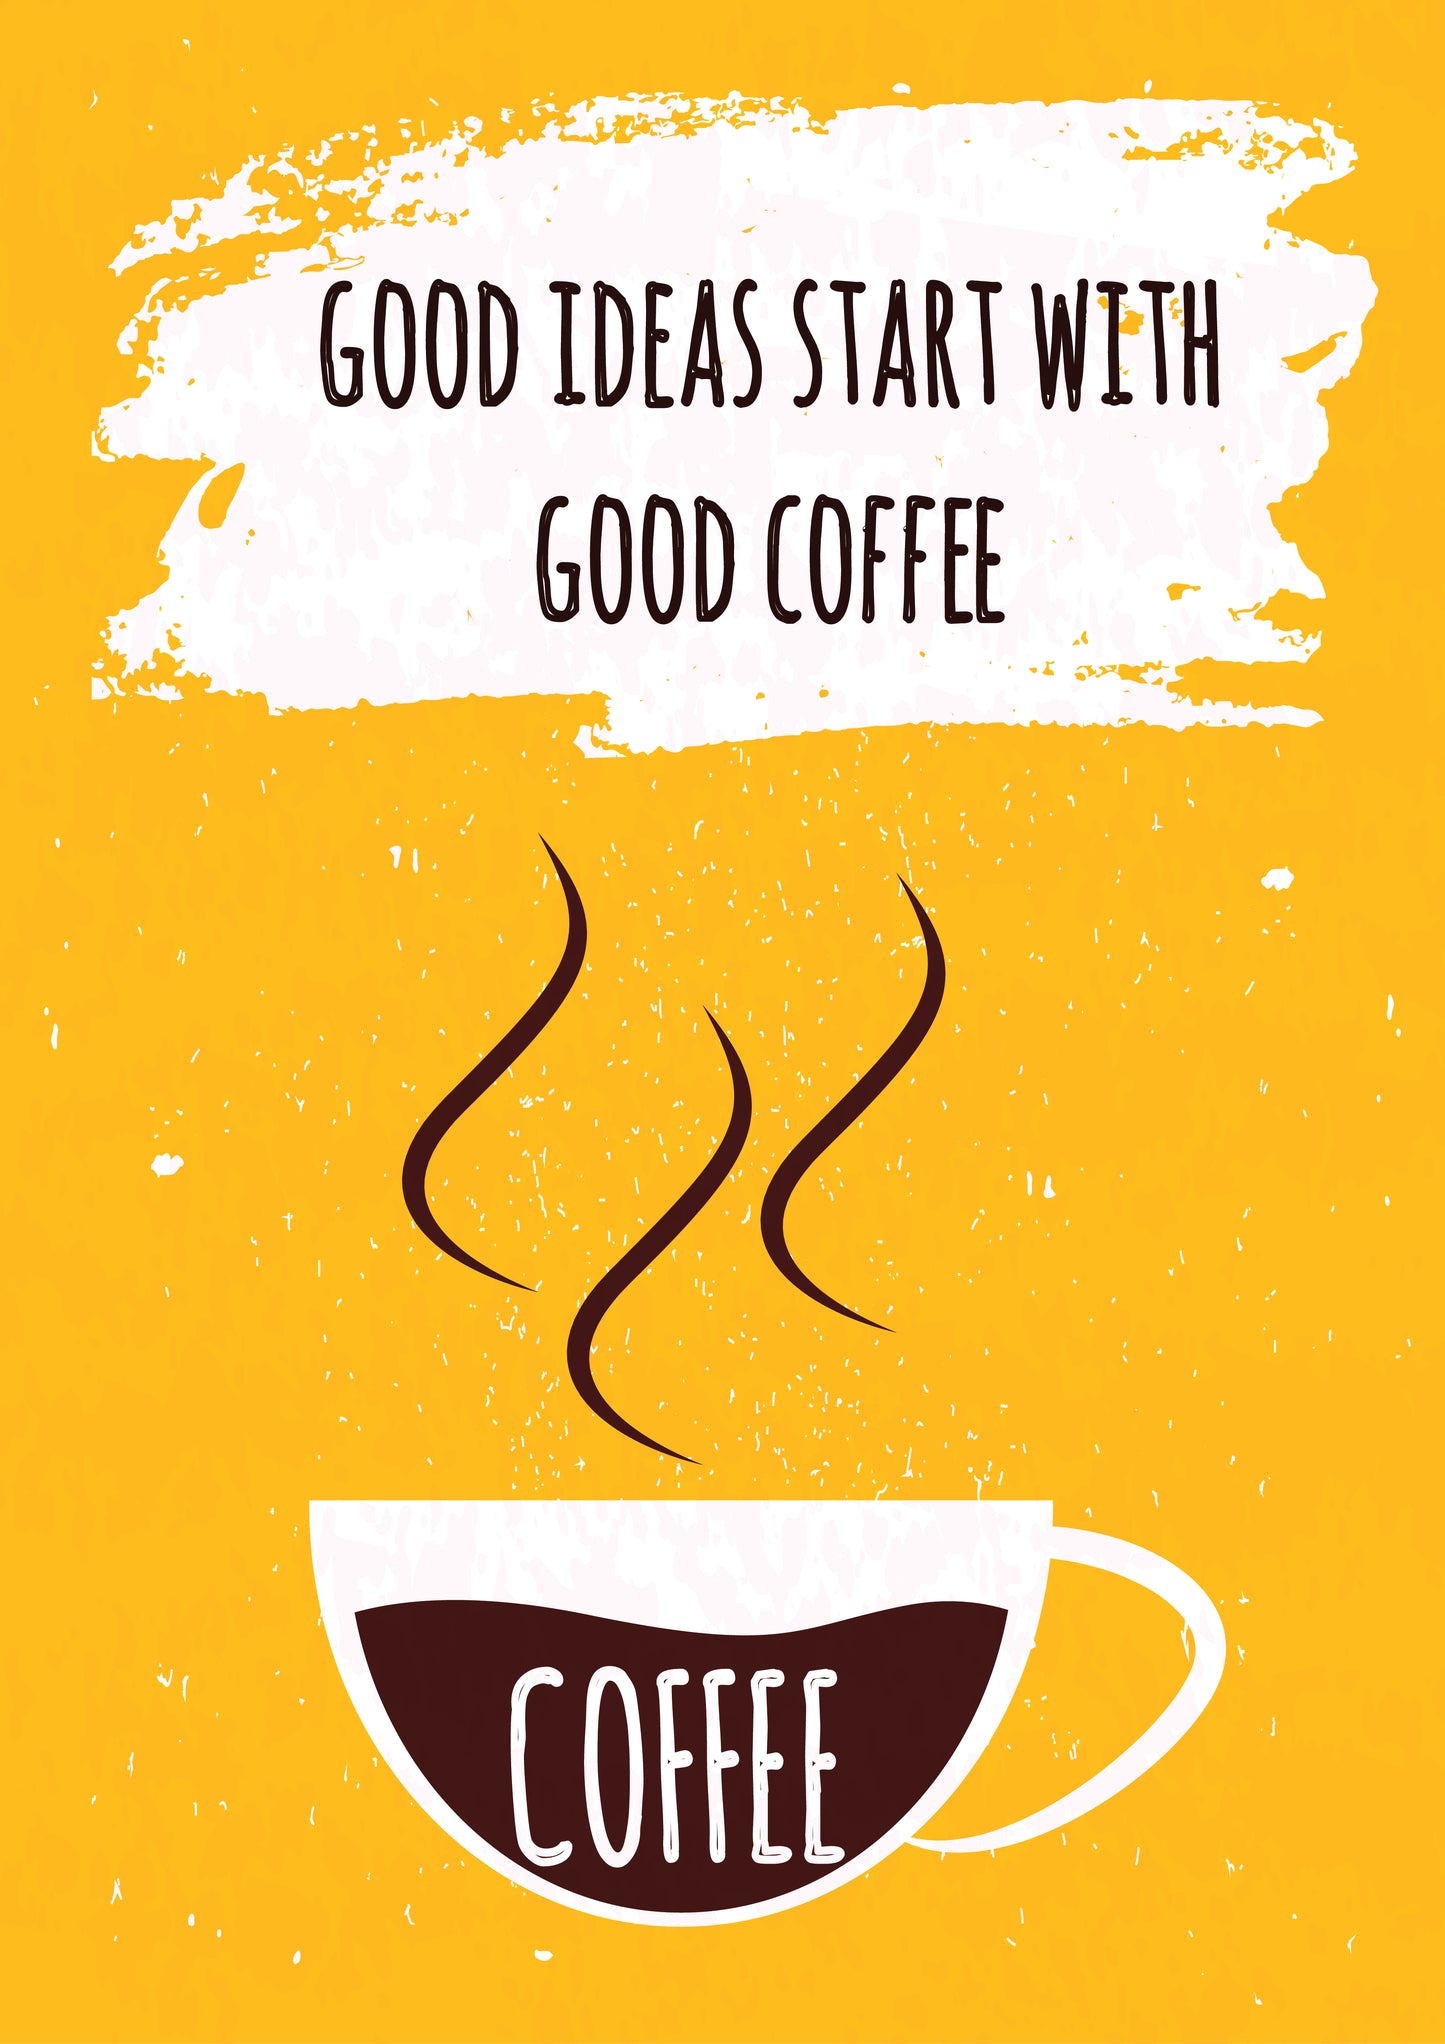 Good Ideas start with Good Coffee